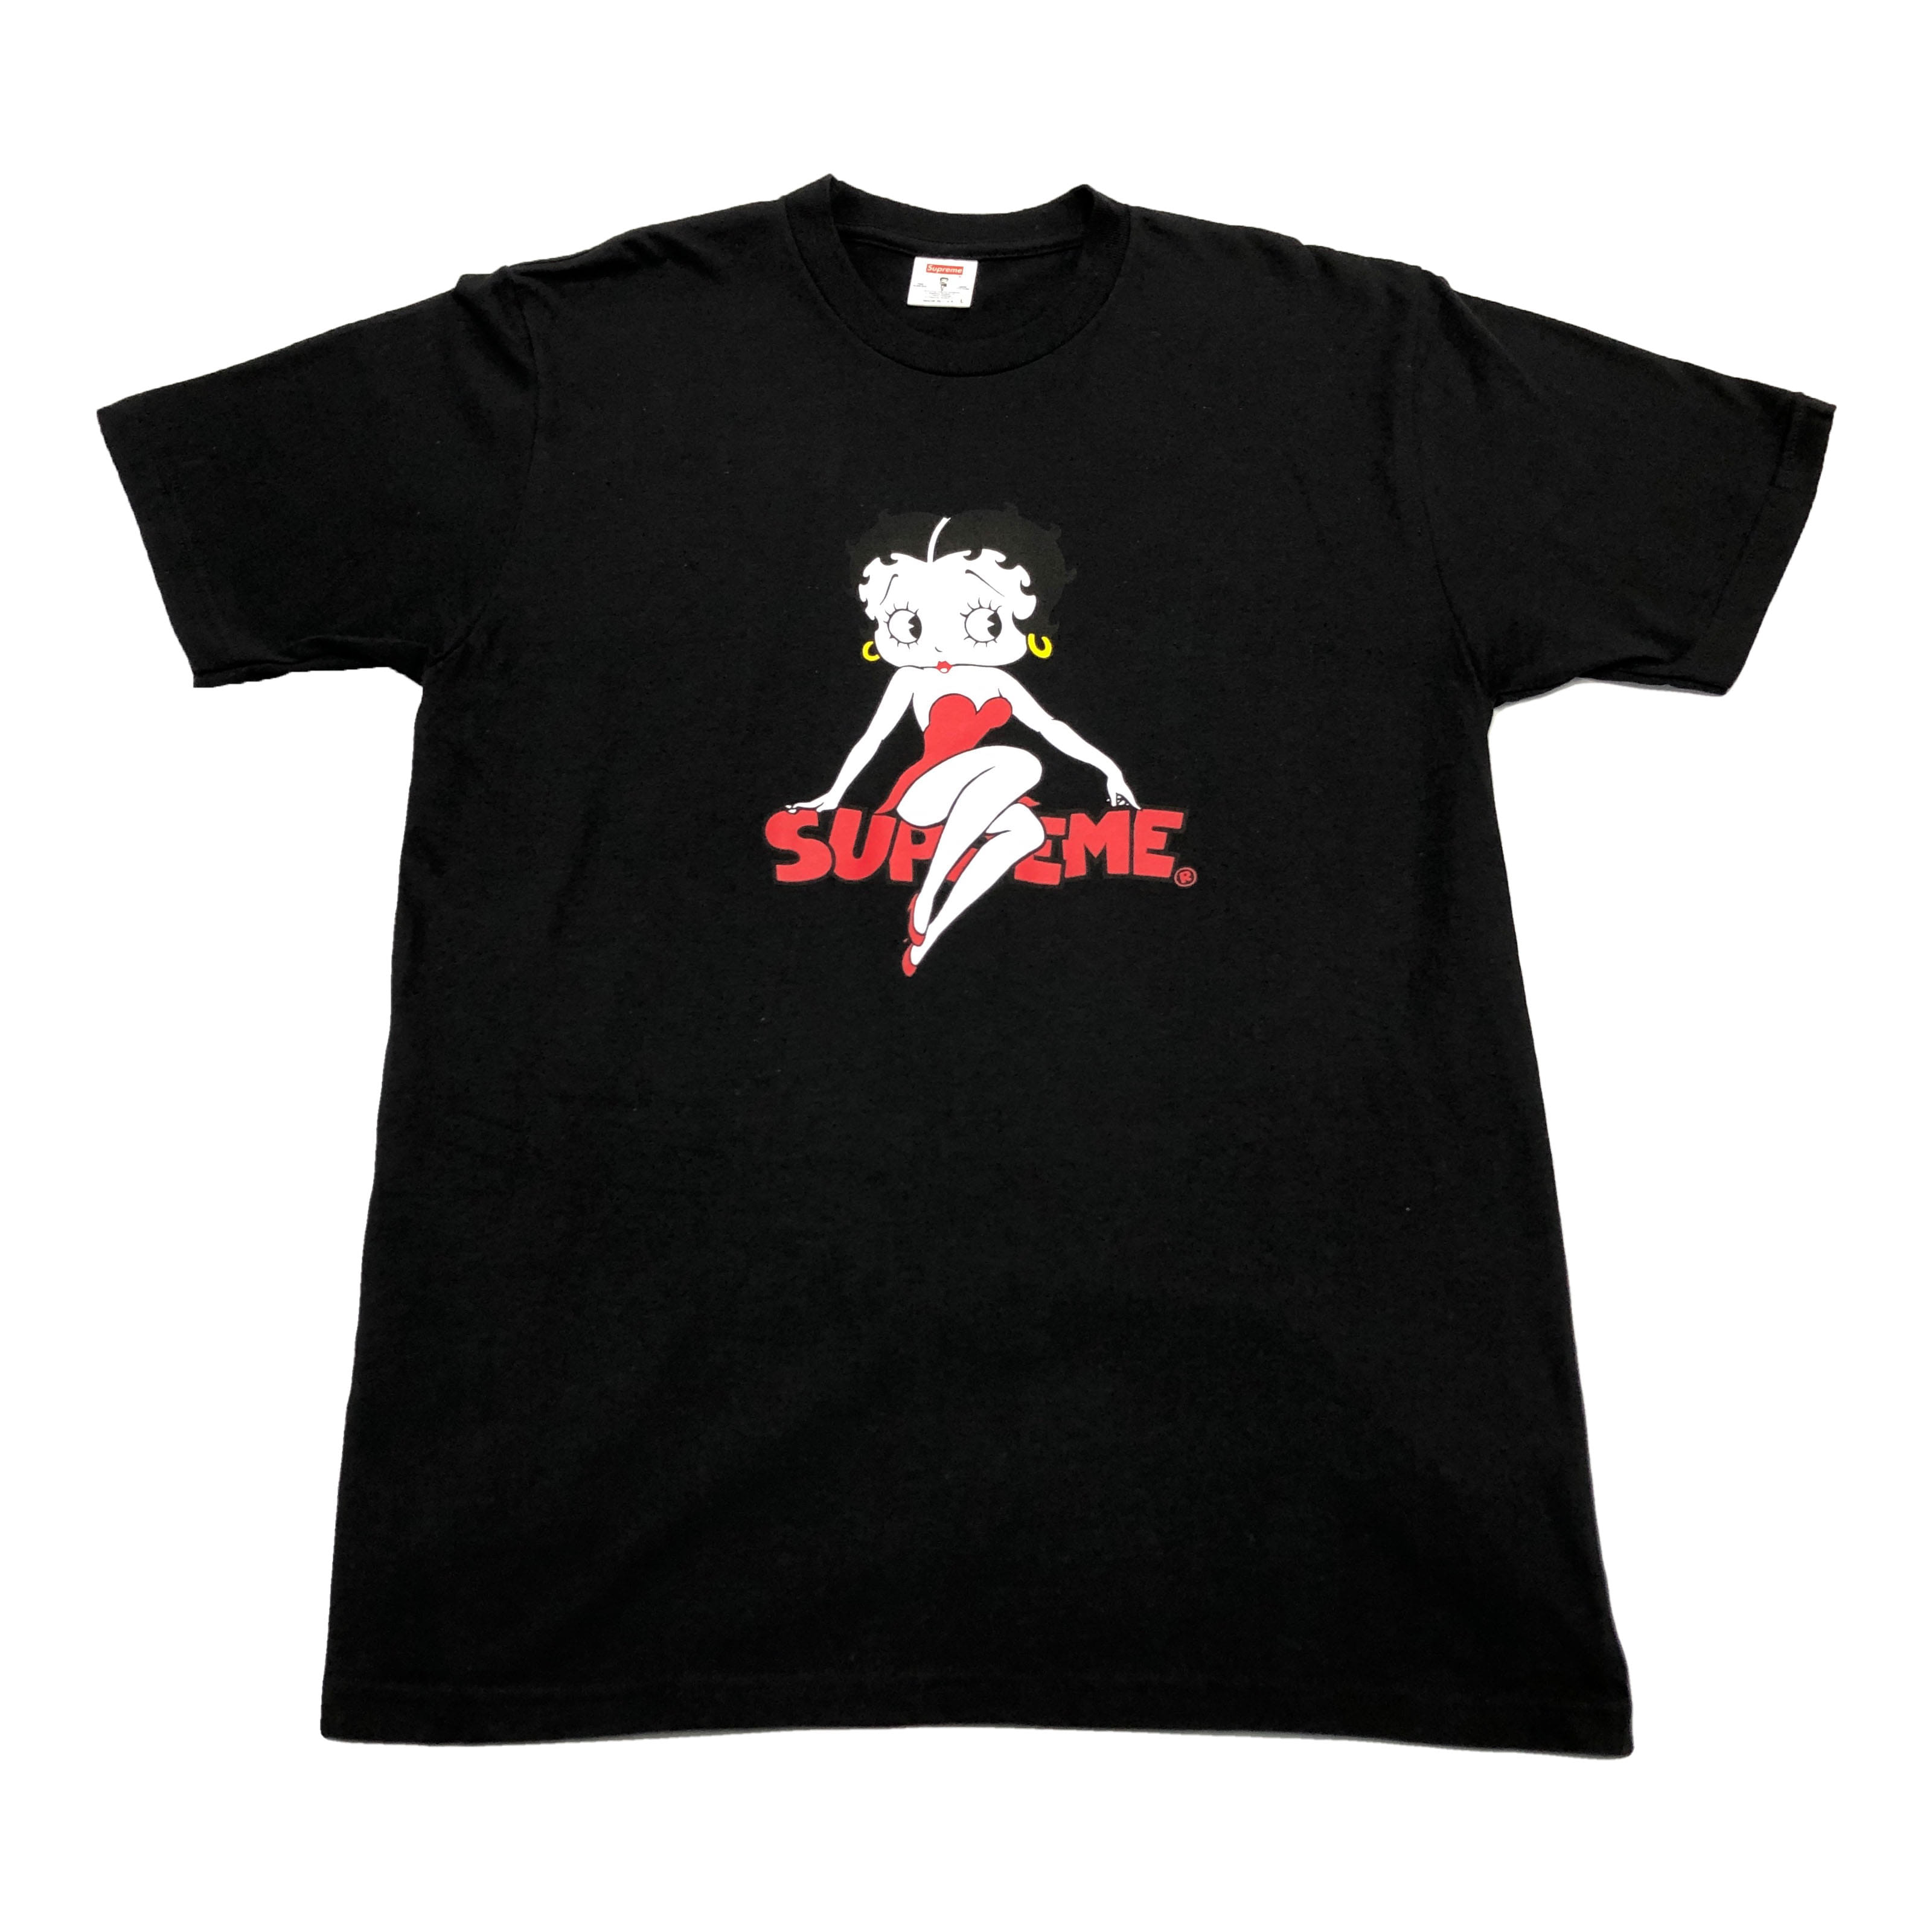 [Supreme] Betty Boop Short T-shirt - Size L